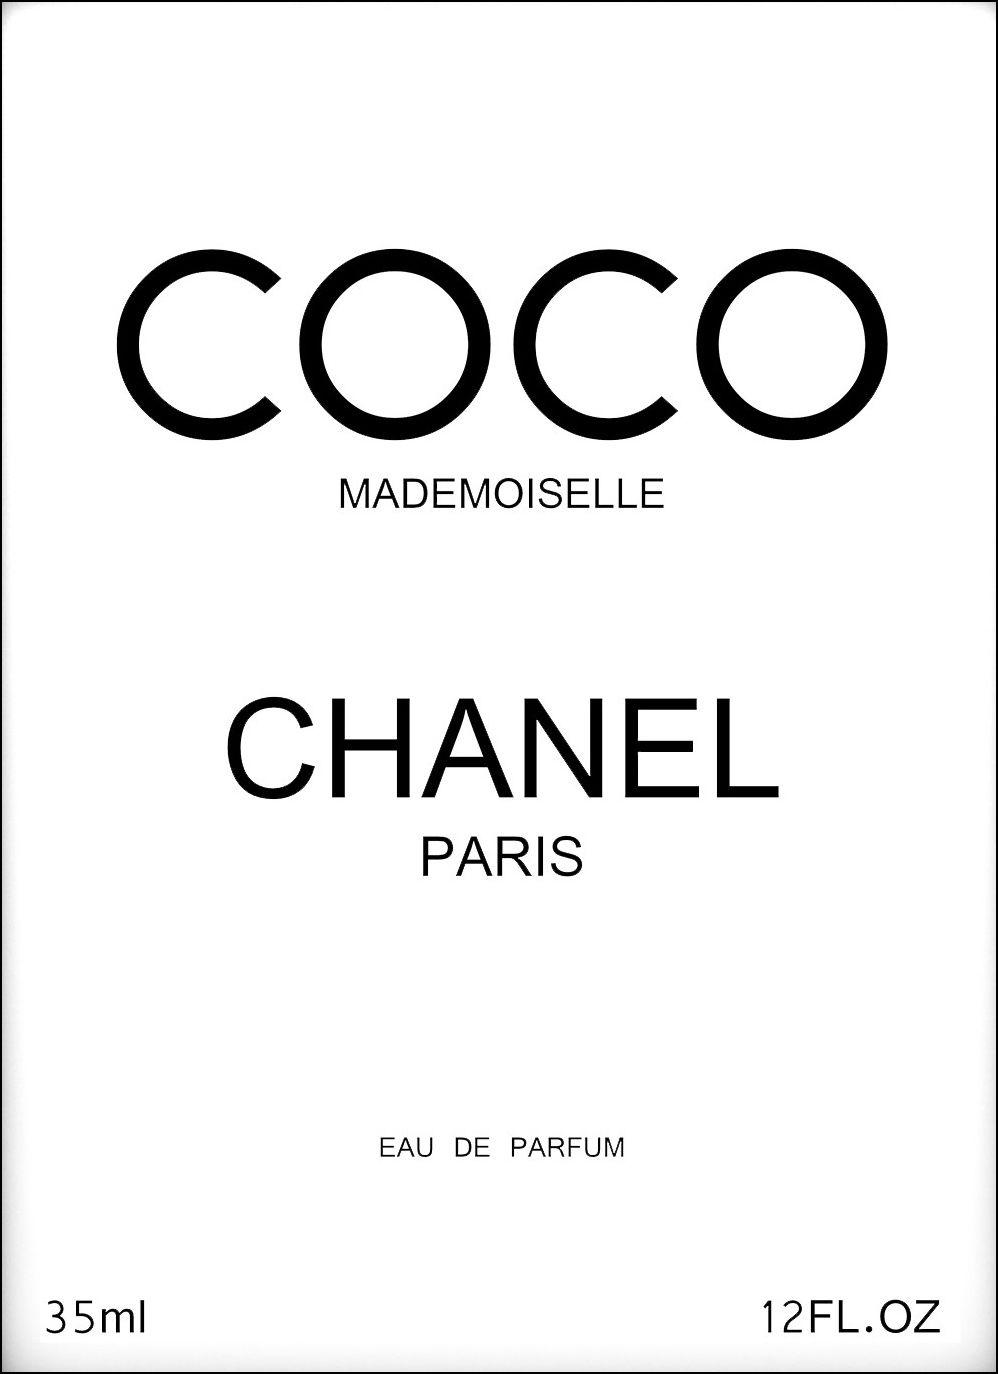 Coco Chanel Paris Logo - LogoDix